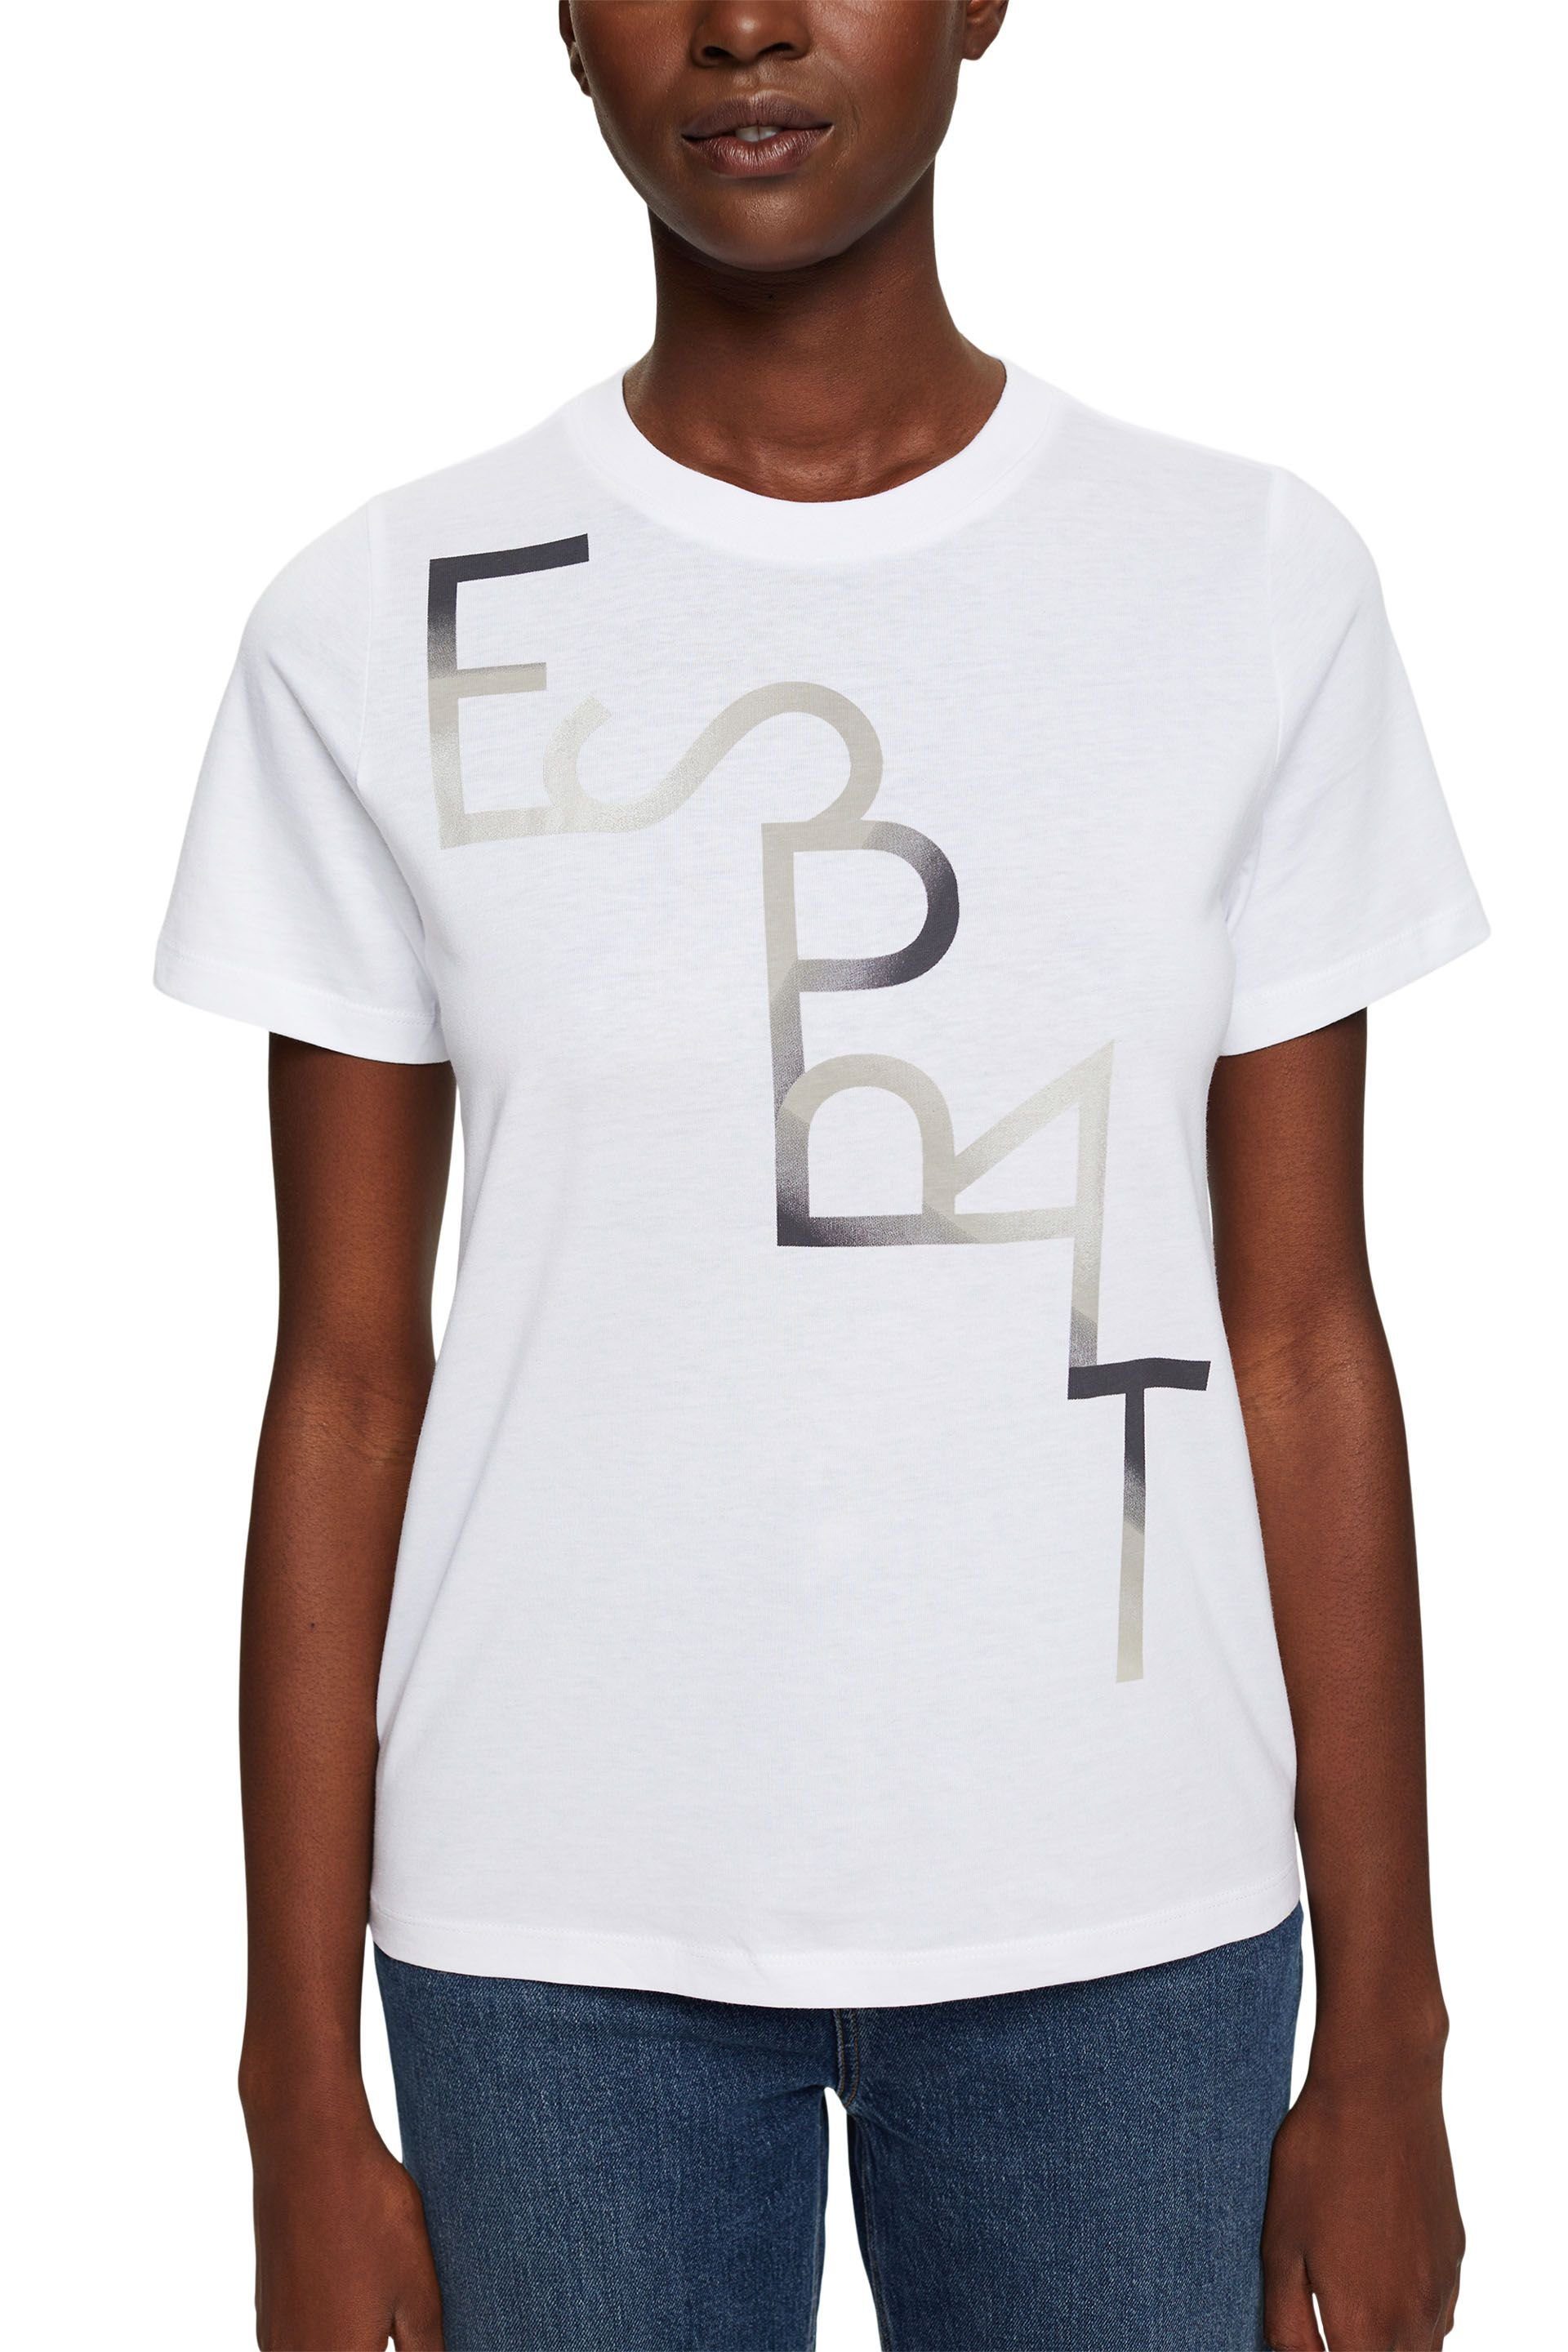 Esprit T-Shirt unbekannt